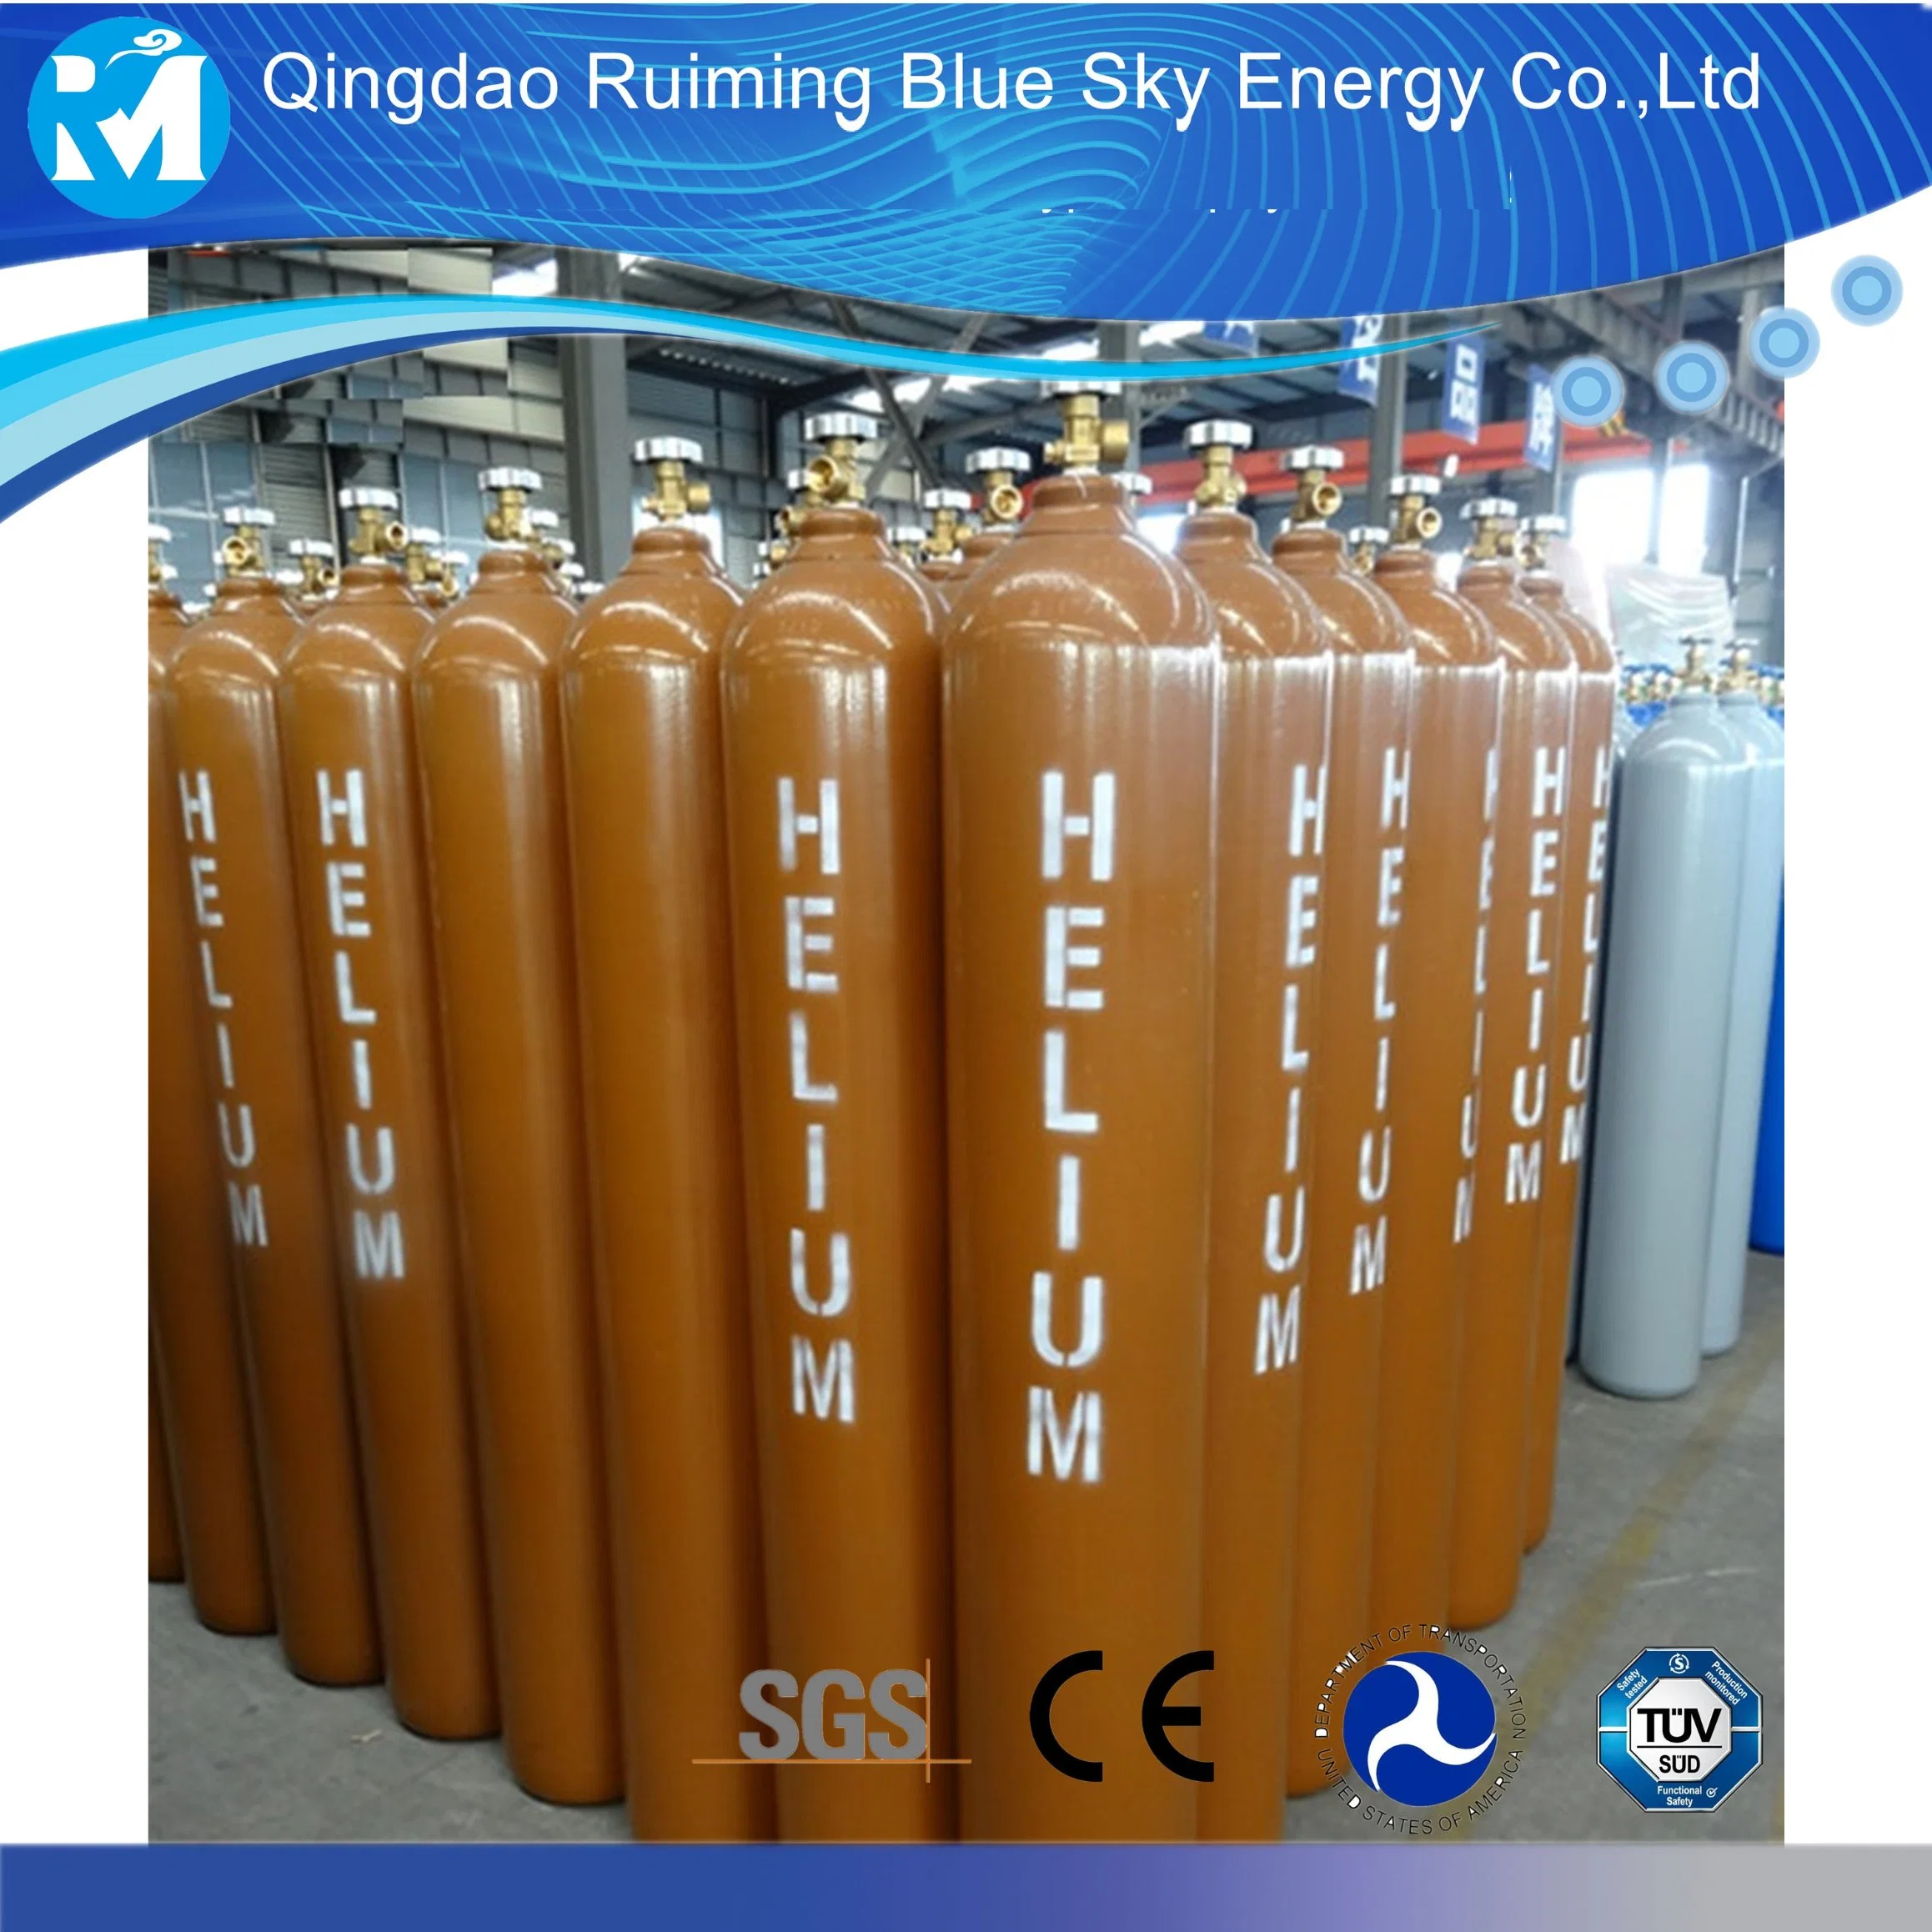 He Industrial Grade RM Cylinders 40L-50L Qingdao, China Refrigerants Helium Gas